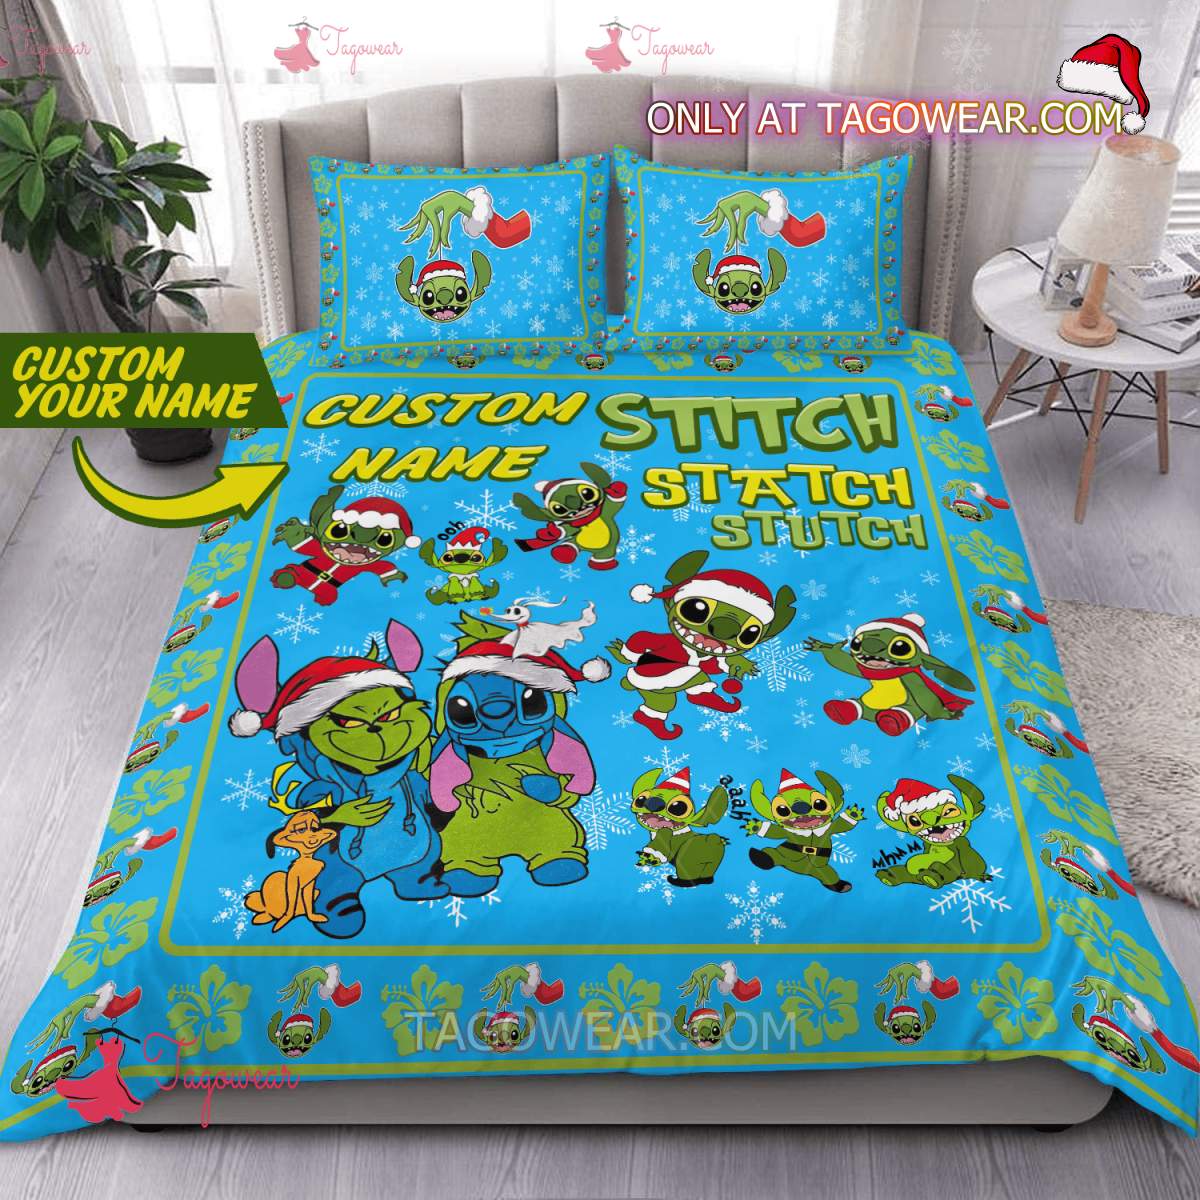 Stitch Statch Stutch Grinch Personalized Bedding Set